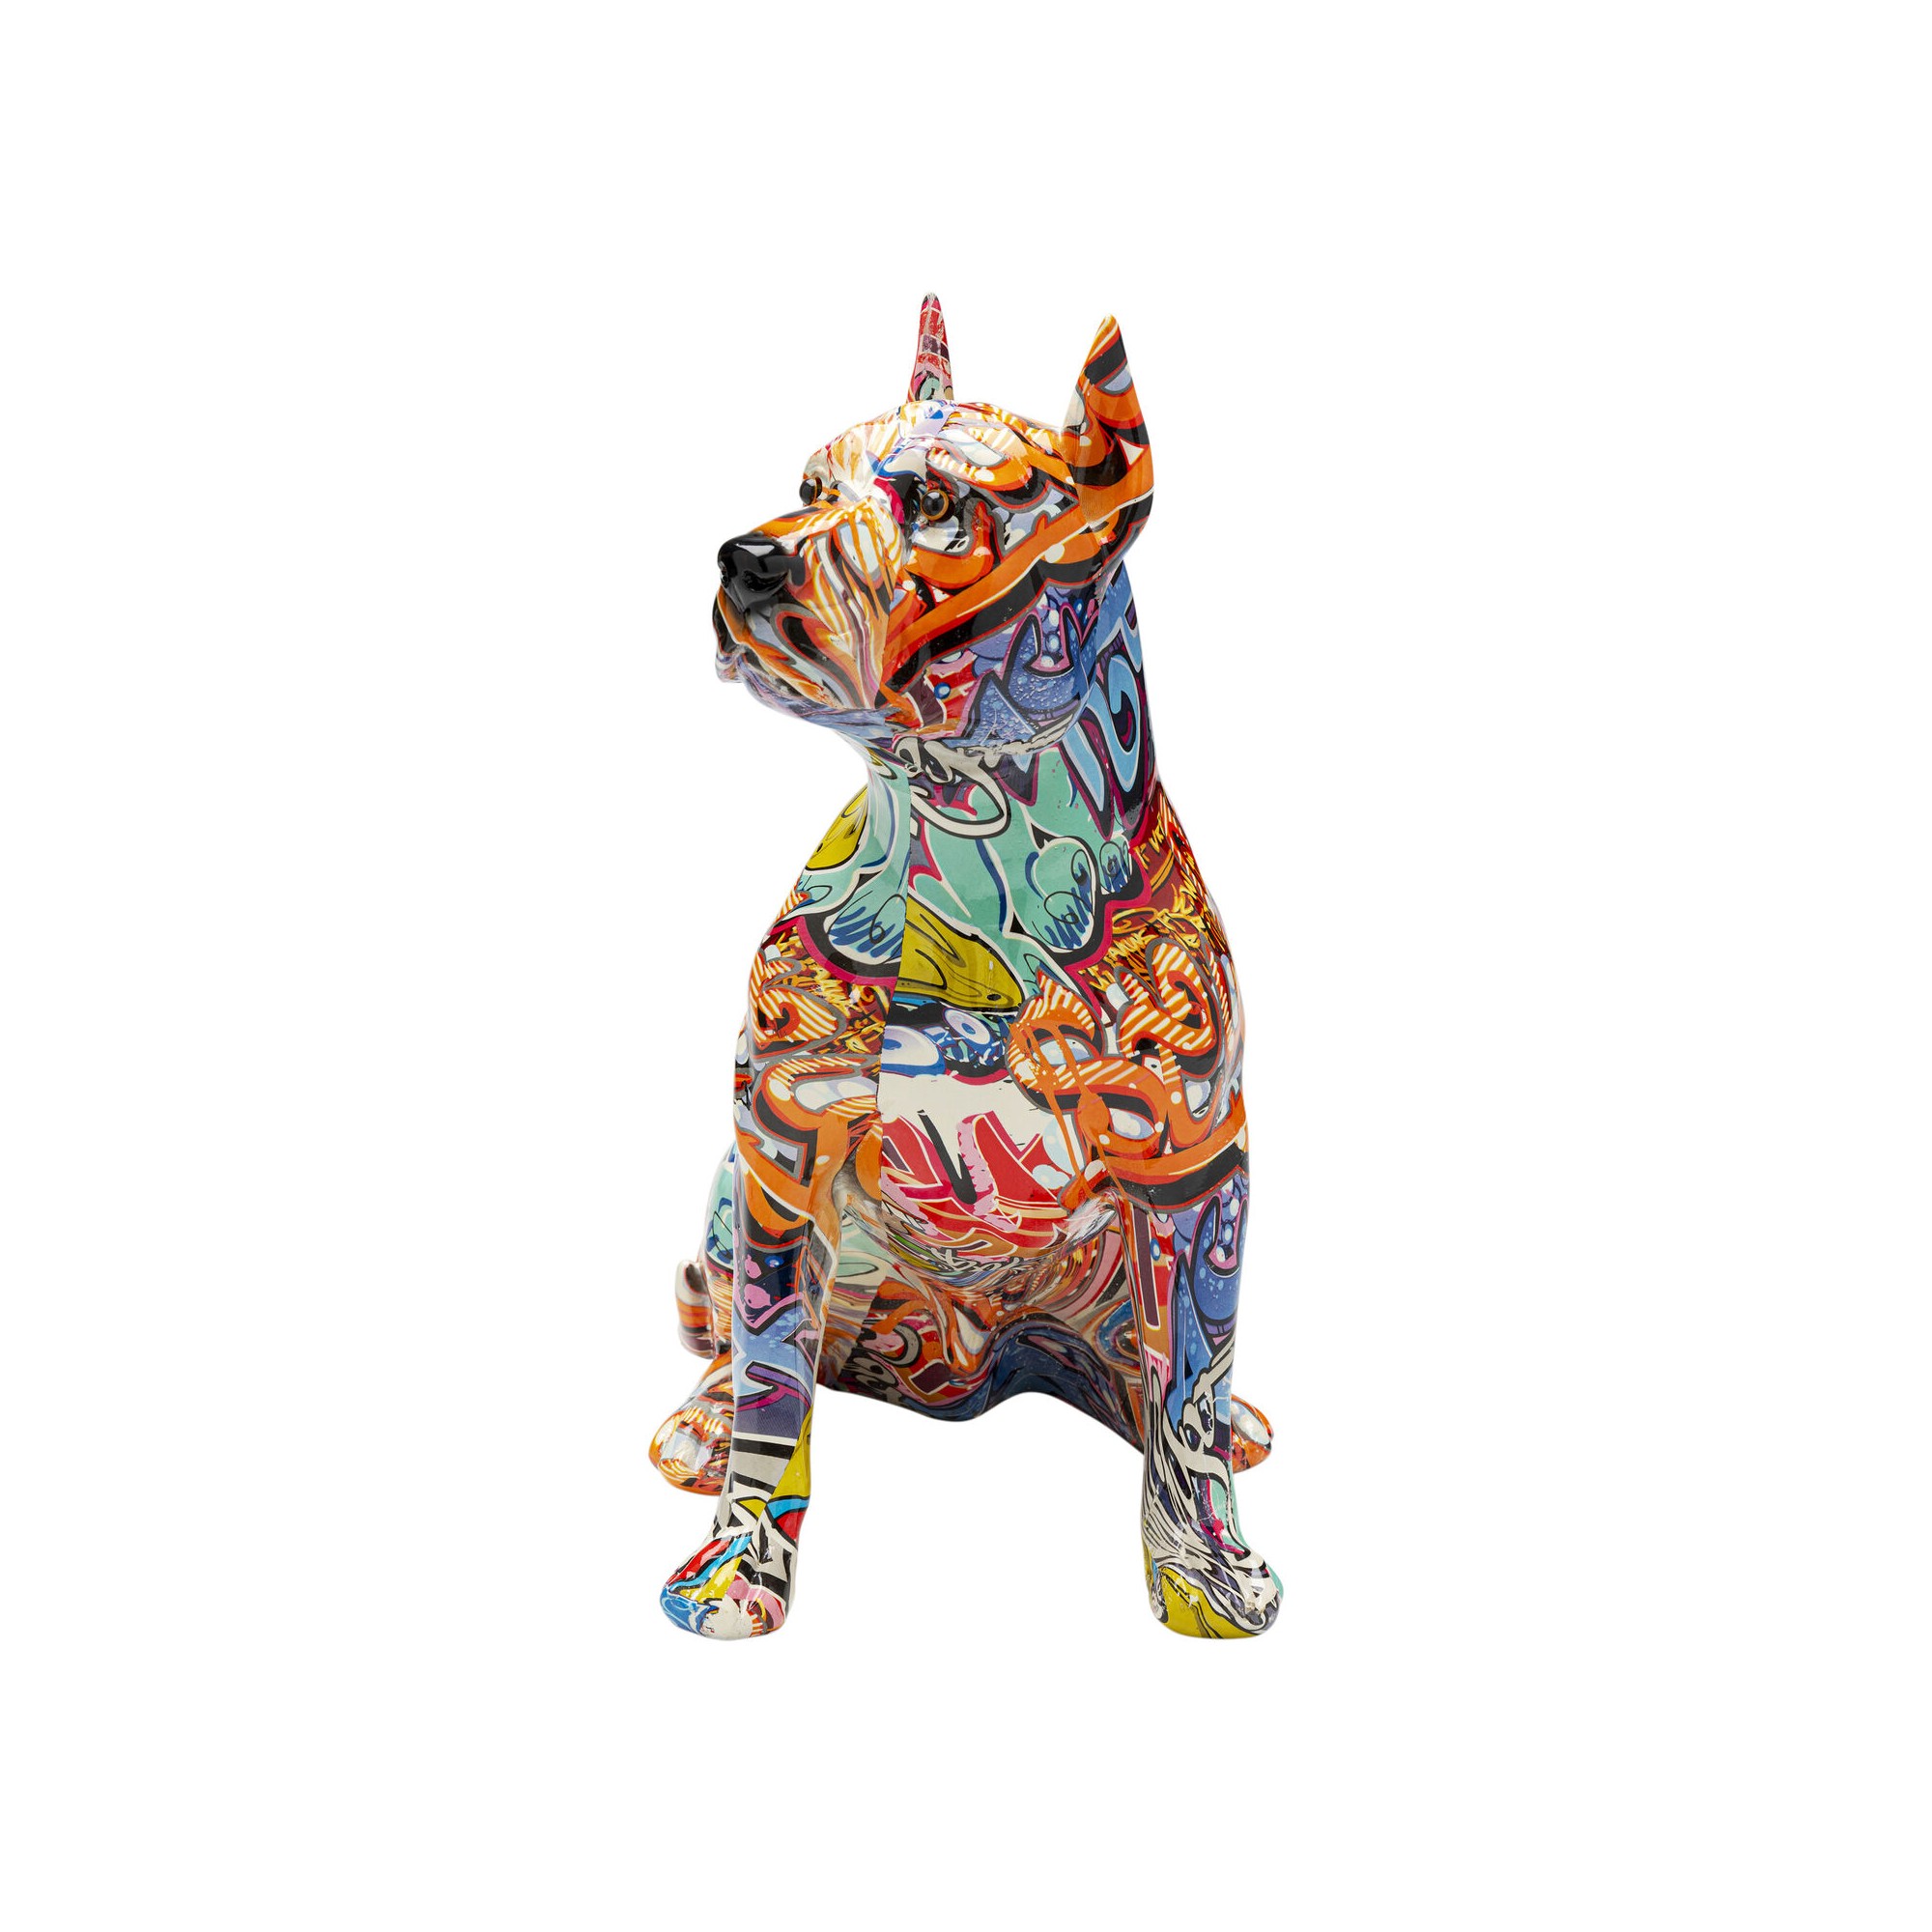 Figurine décorative Graffiti Dog 41cm